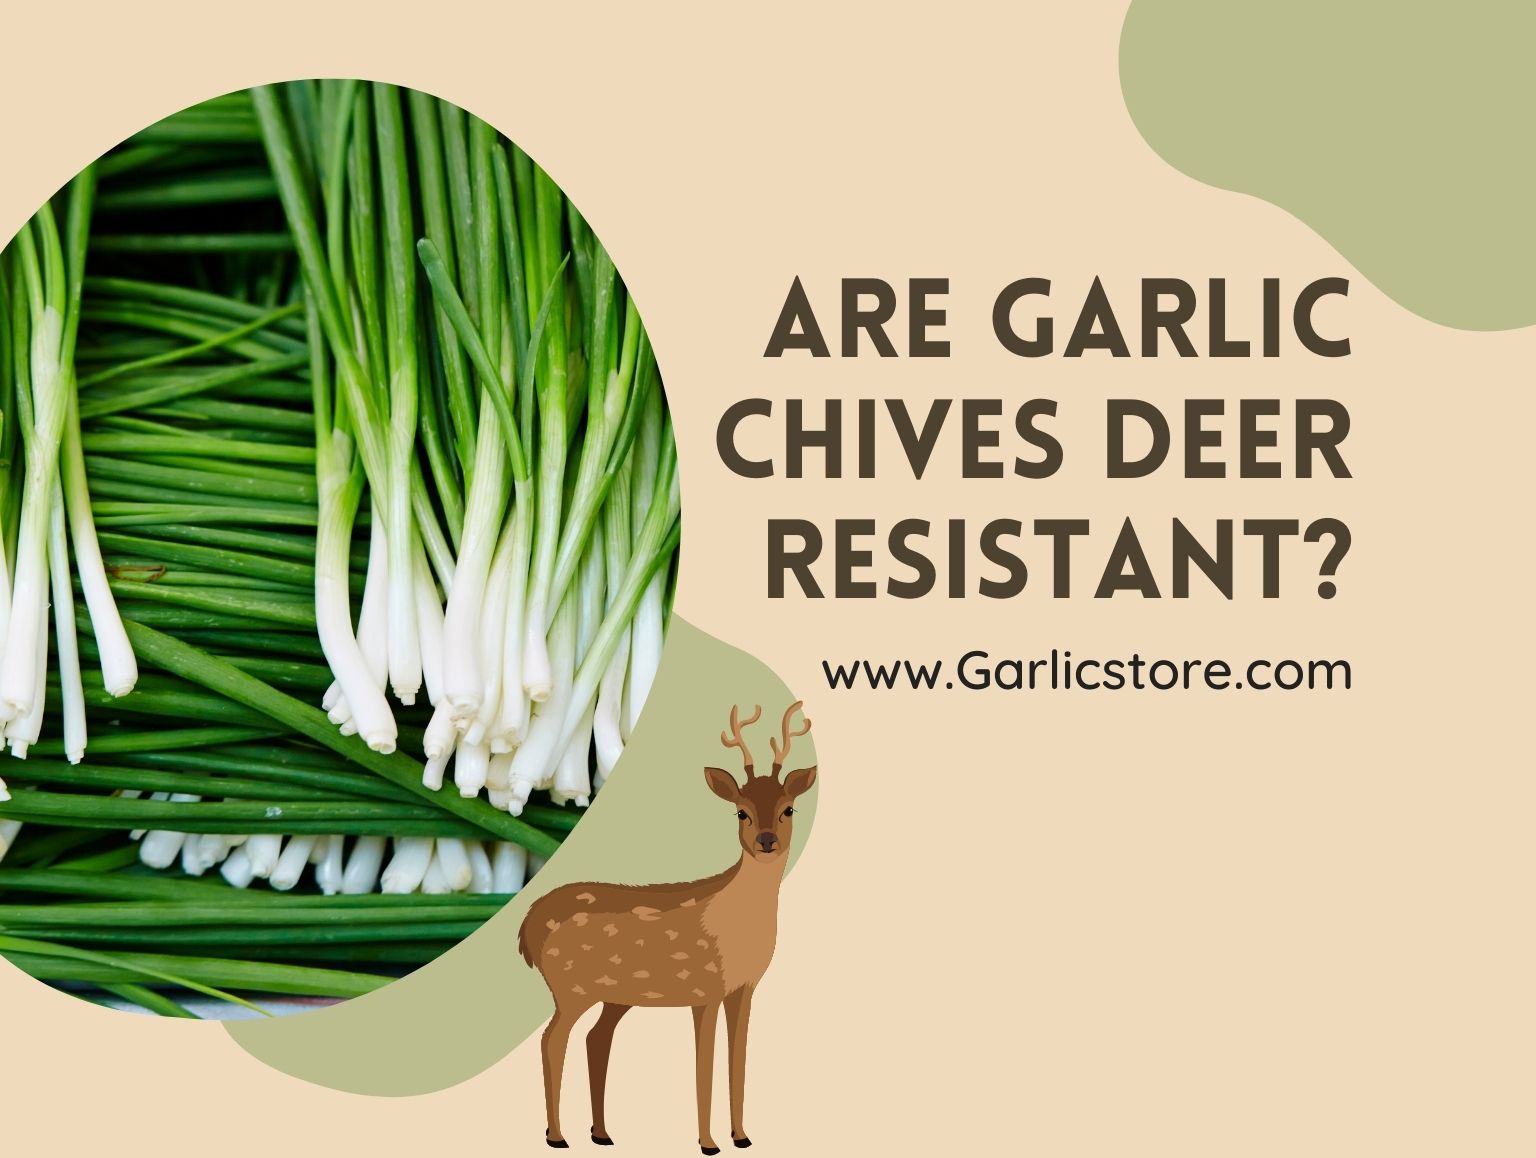 Are garlic chives deer resistant